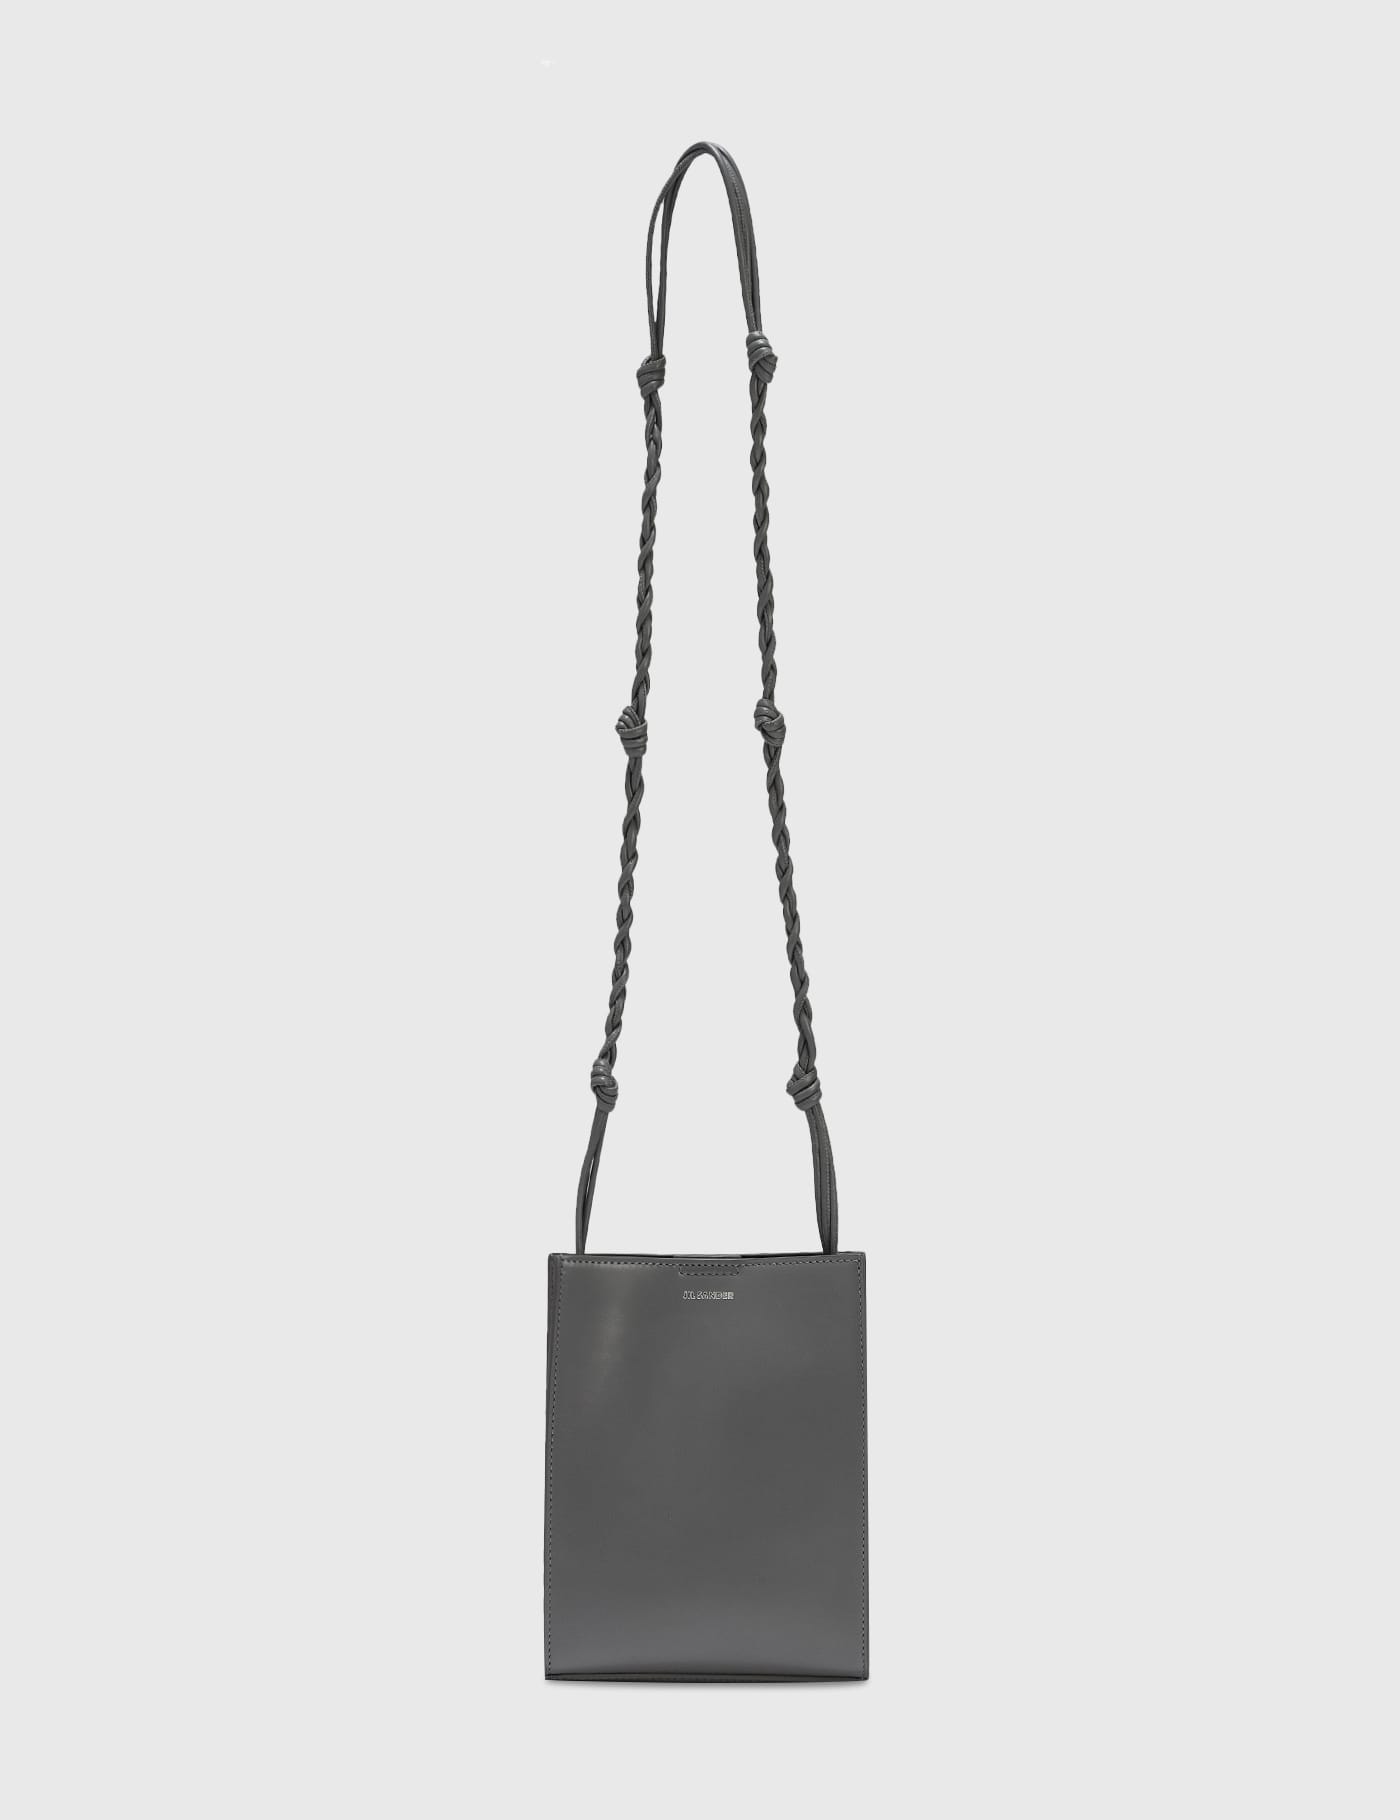 Jil Sander - Tangle Small Bag | HBX - Globally Curated Fashion and